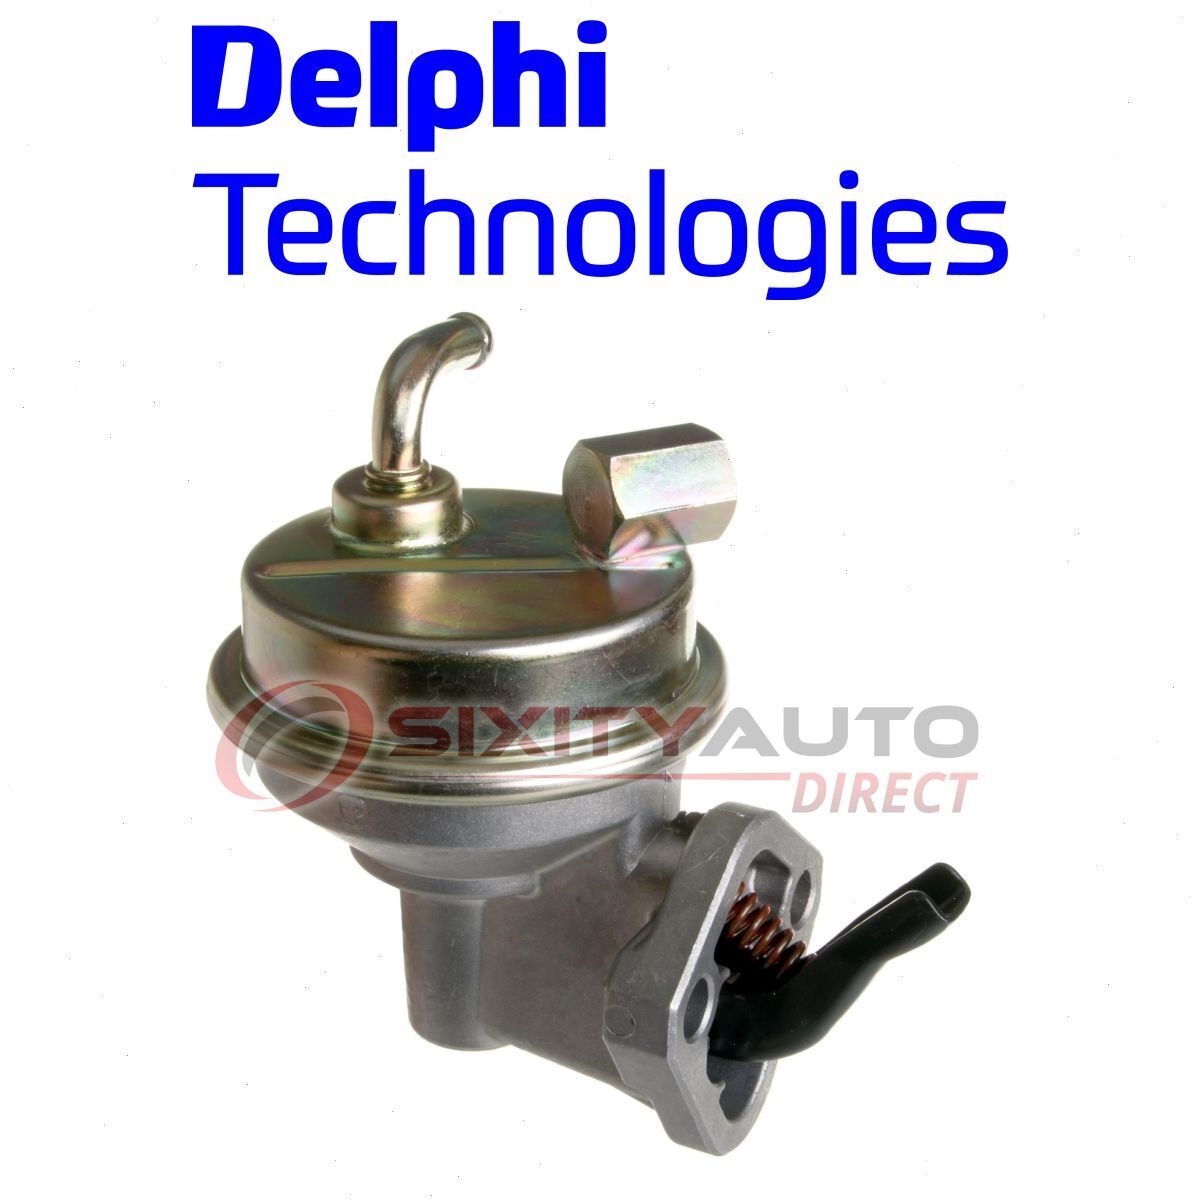 Delphi Mechanical Fuel Pump for 1978-1980 Oldsmobile Cutlass Supreme 5.7L V8 ba